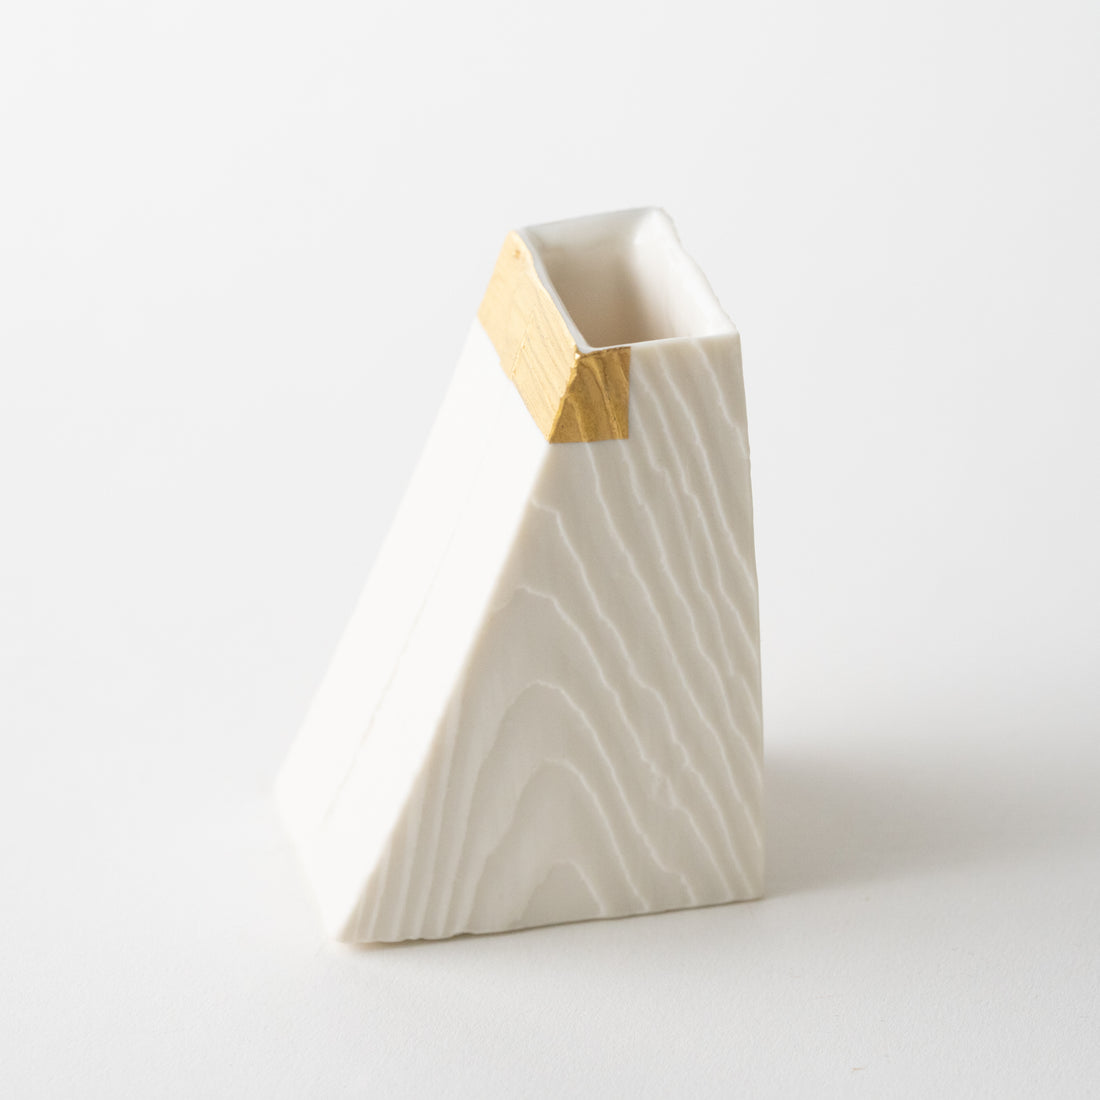 Wood Grain Vase (Gold) / Ryosuke Ando